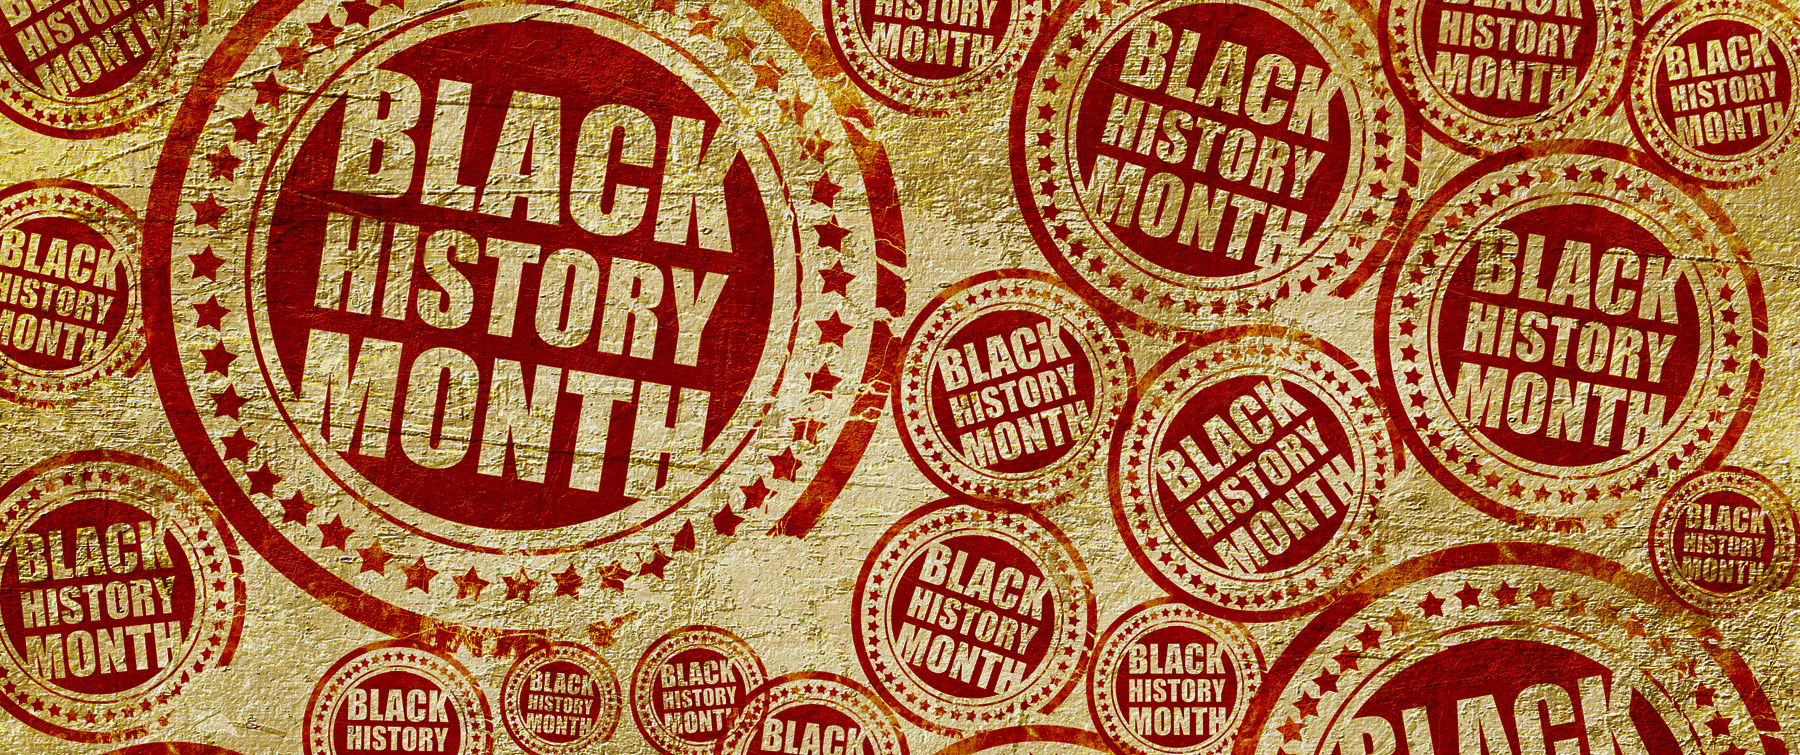 Worcester Celebrates Black History Month